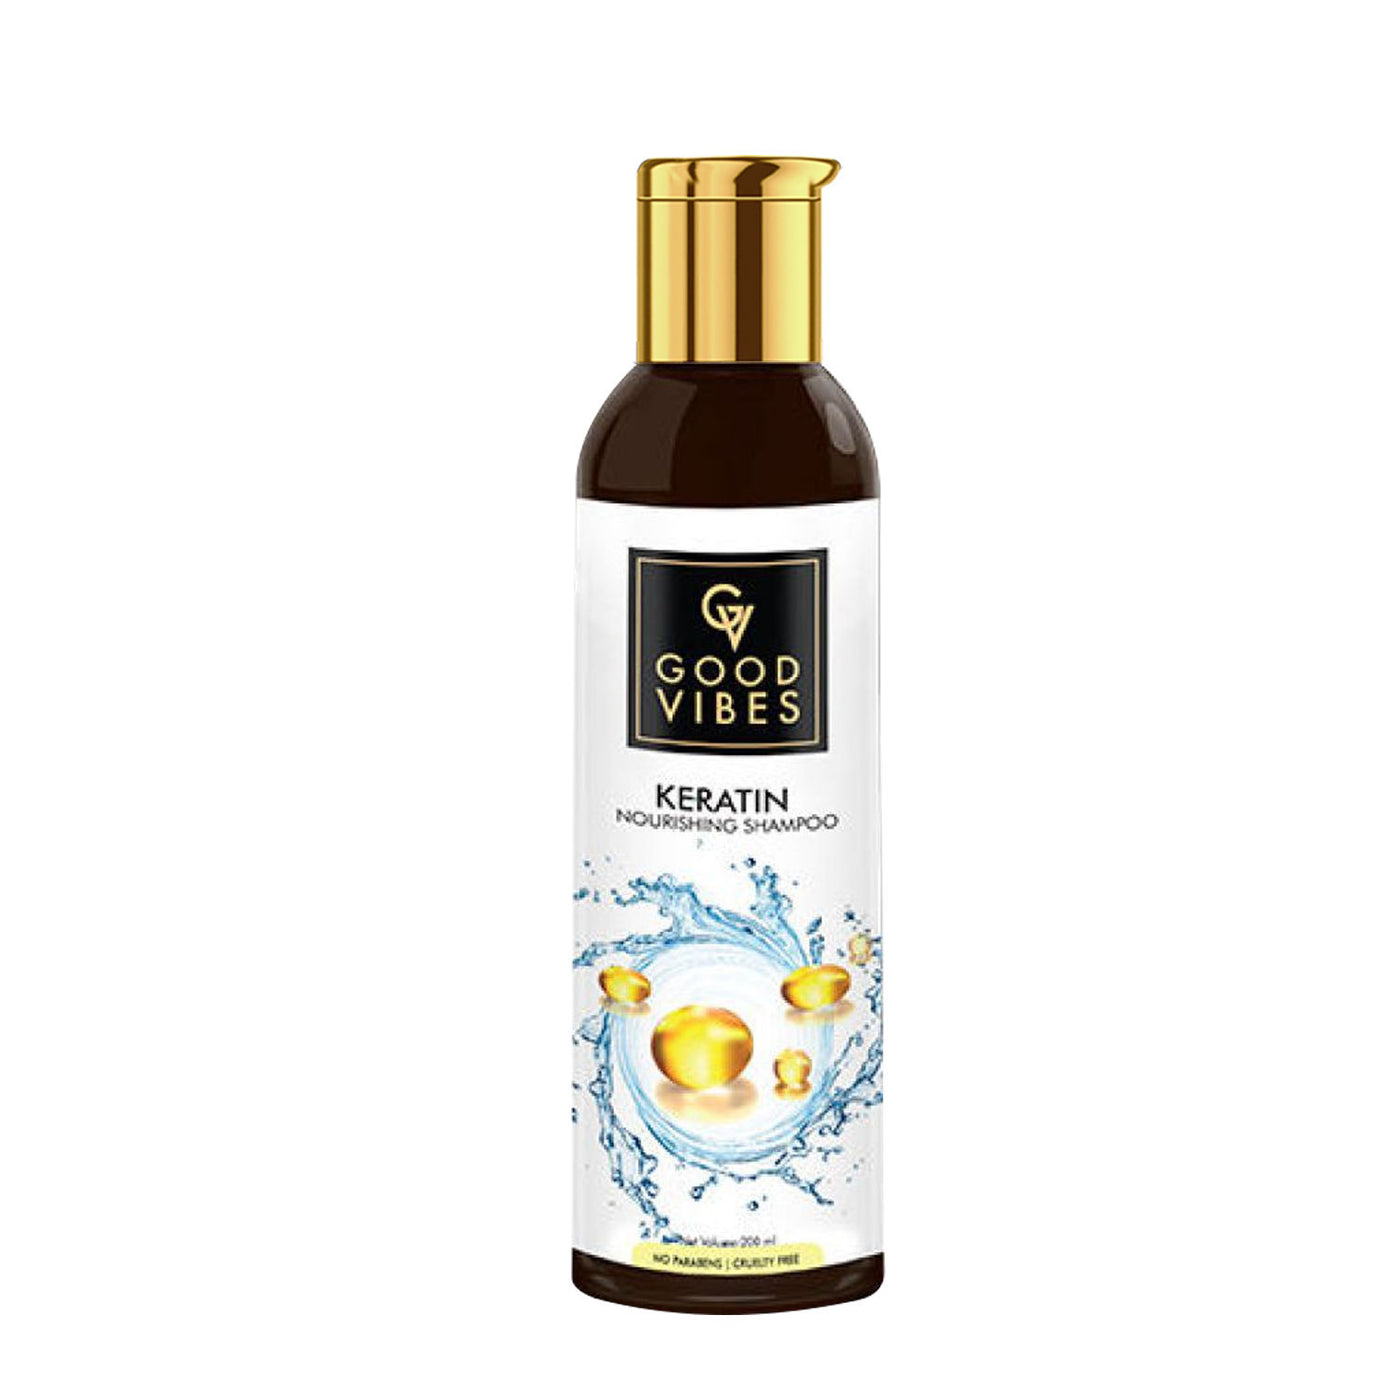 Good Vibes Nourishing Shampoo - Keratin (200 ml) - 7